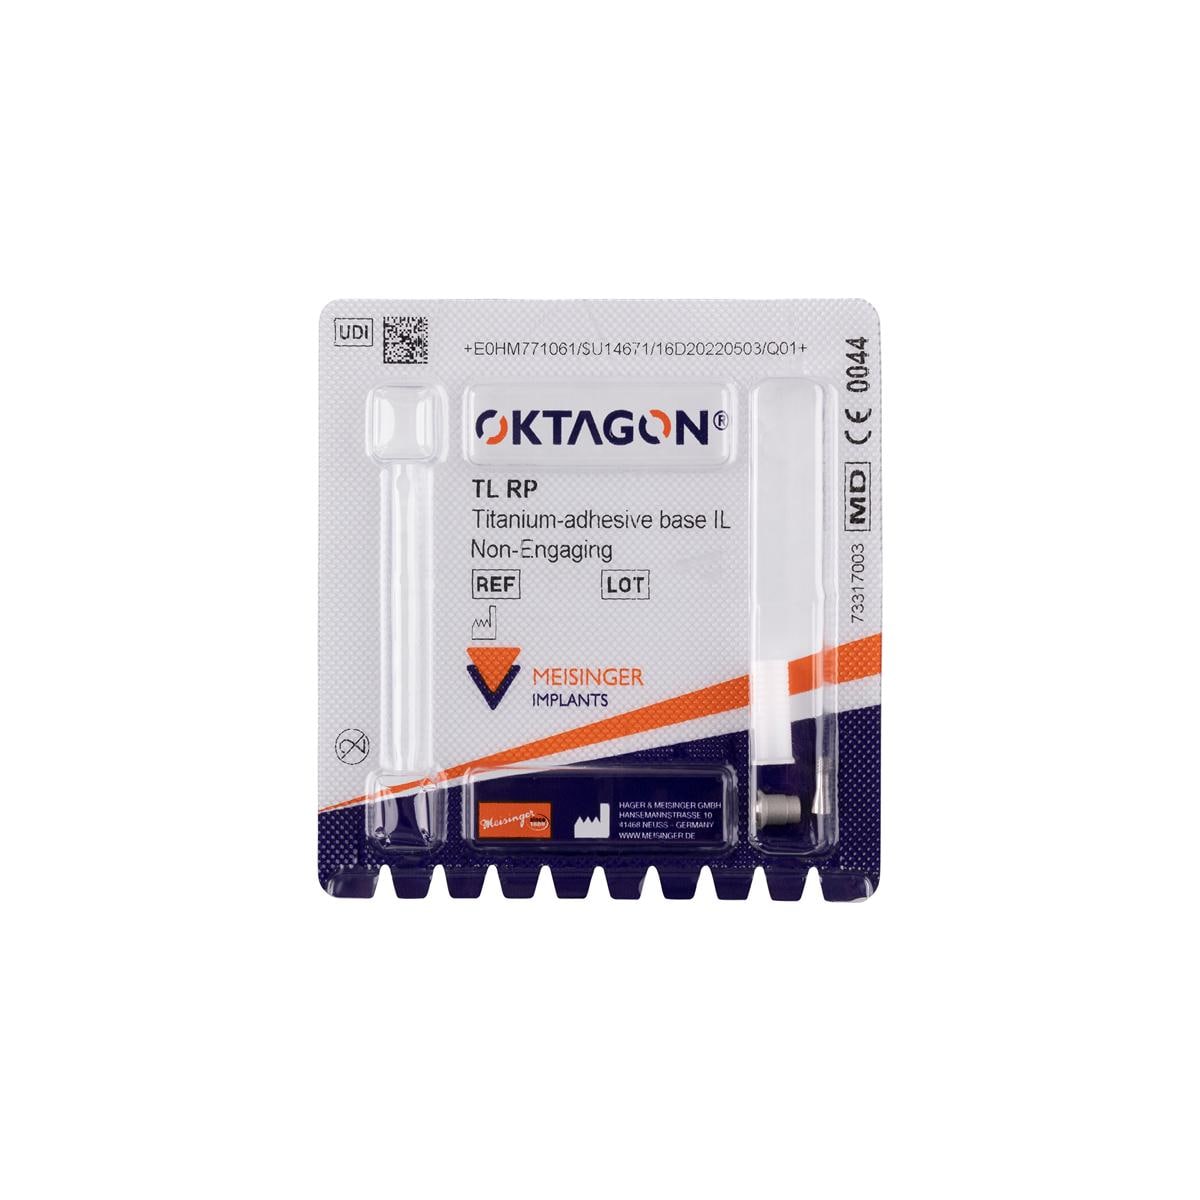 OKTAGON TL RP Titanium-adhesive Base IL N/Engaging